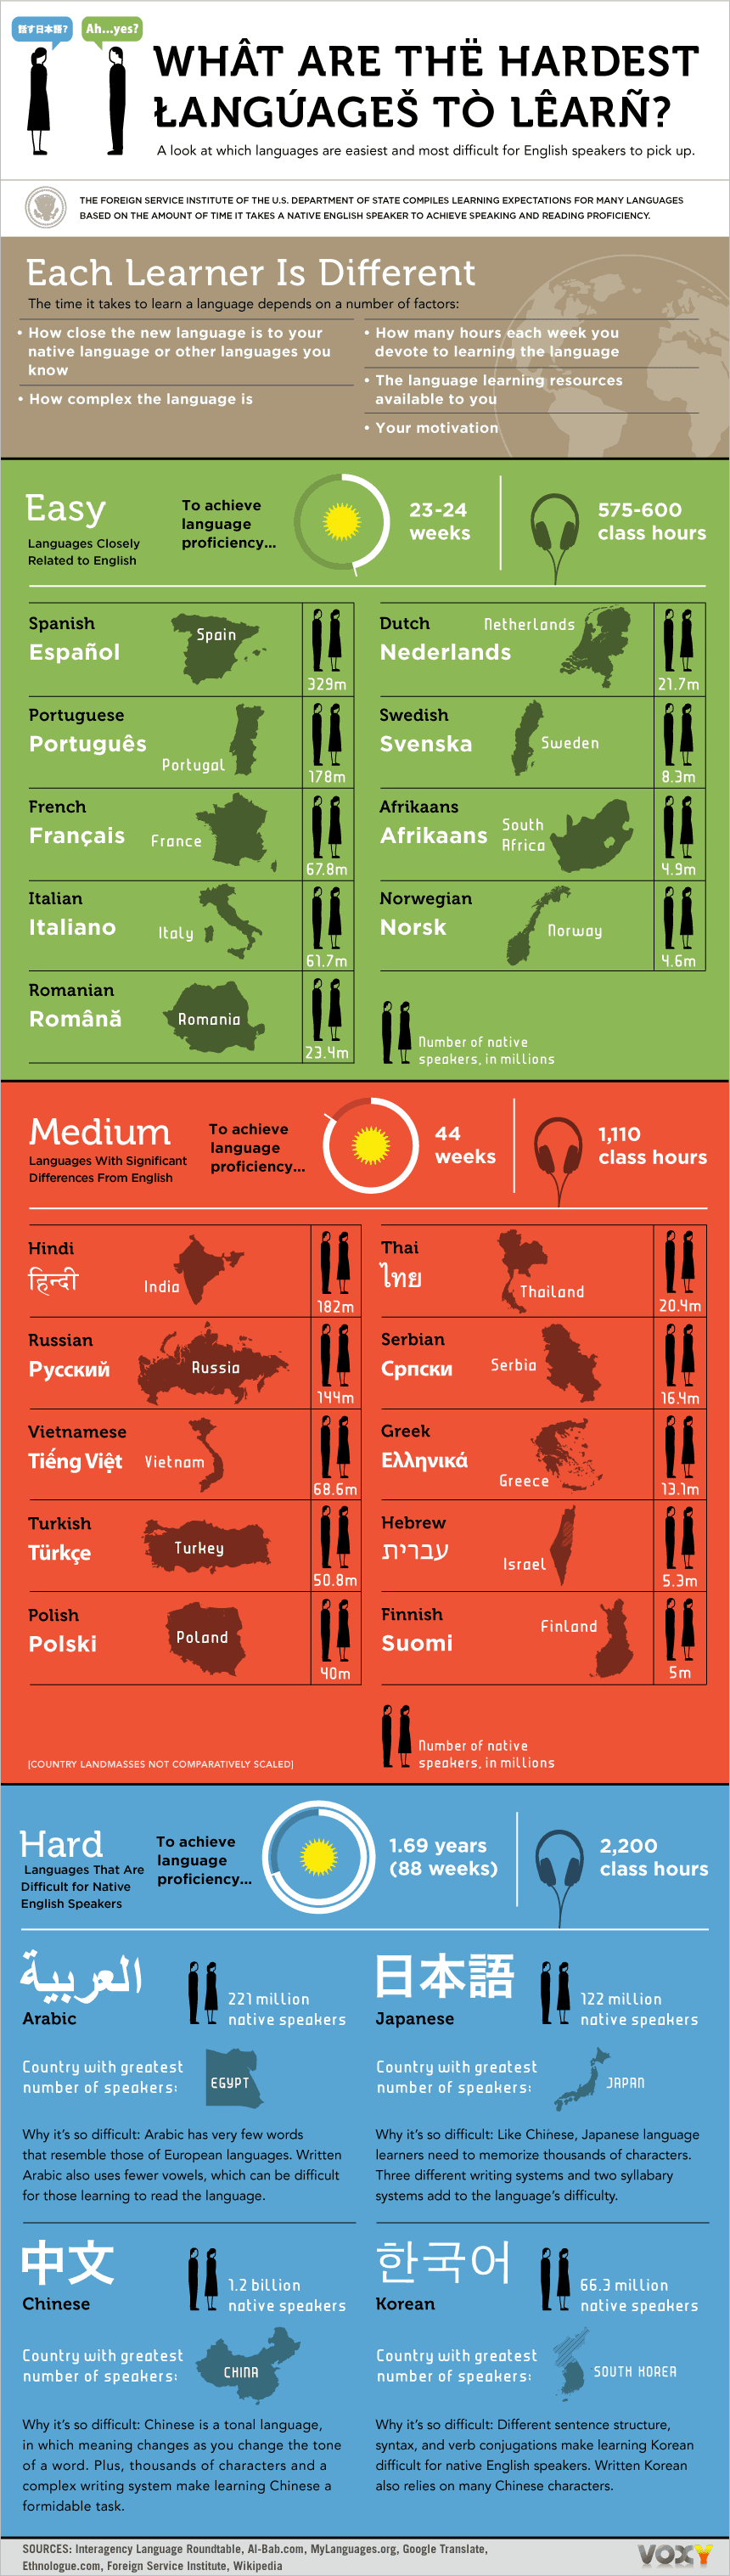 hardest language infographic